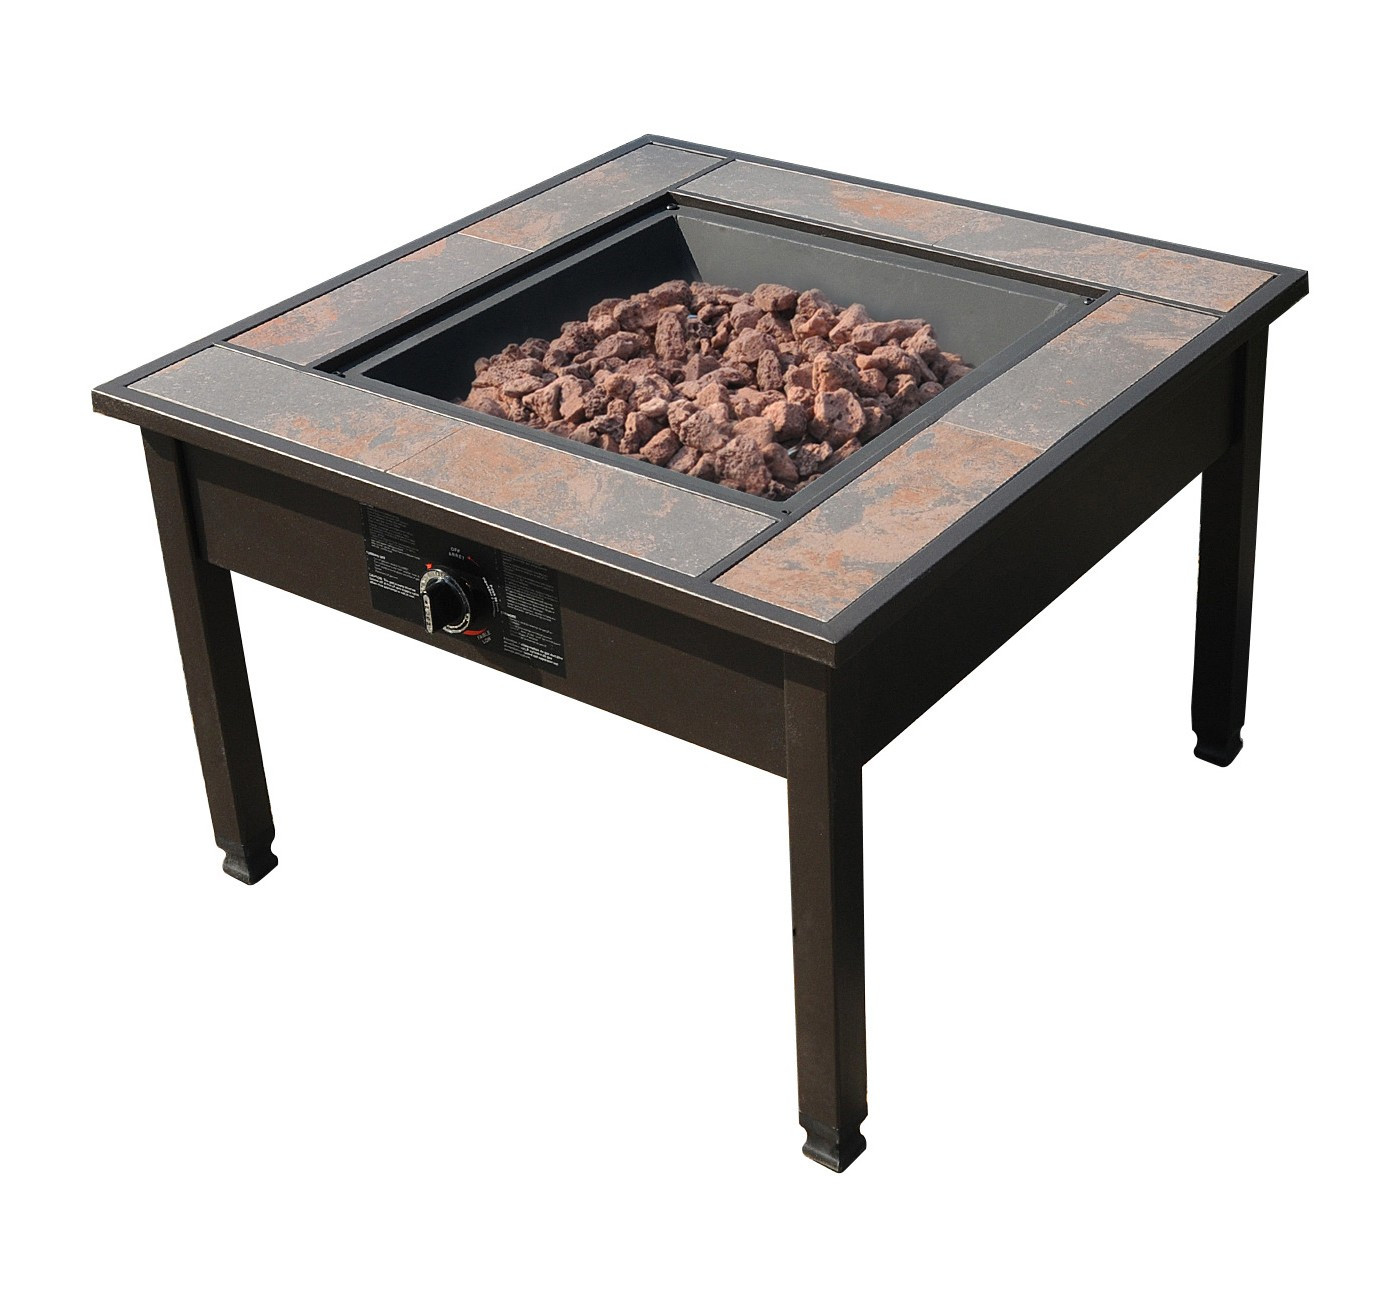 Target Fire Pit Table
 Tar 30" Ceramic Tile Table Top LP Gas Fire Pit $70 49